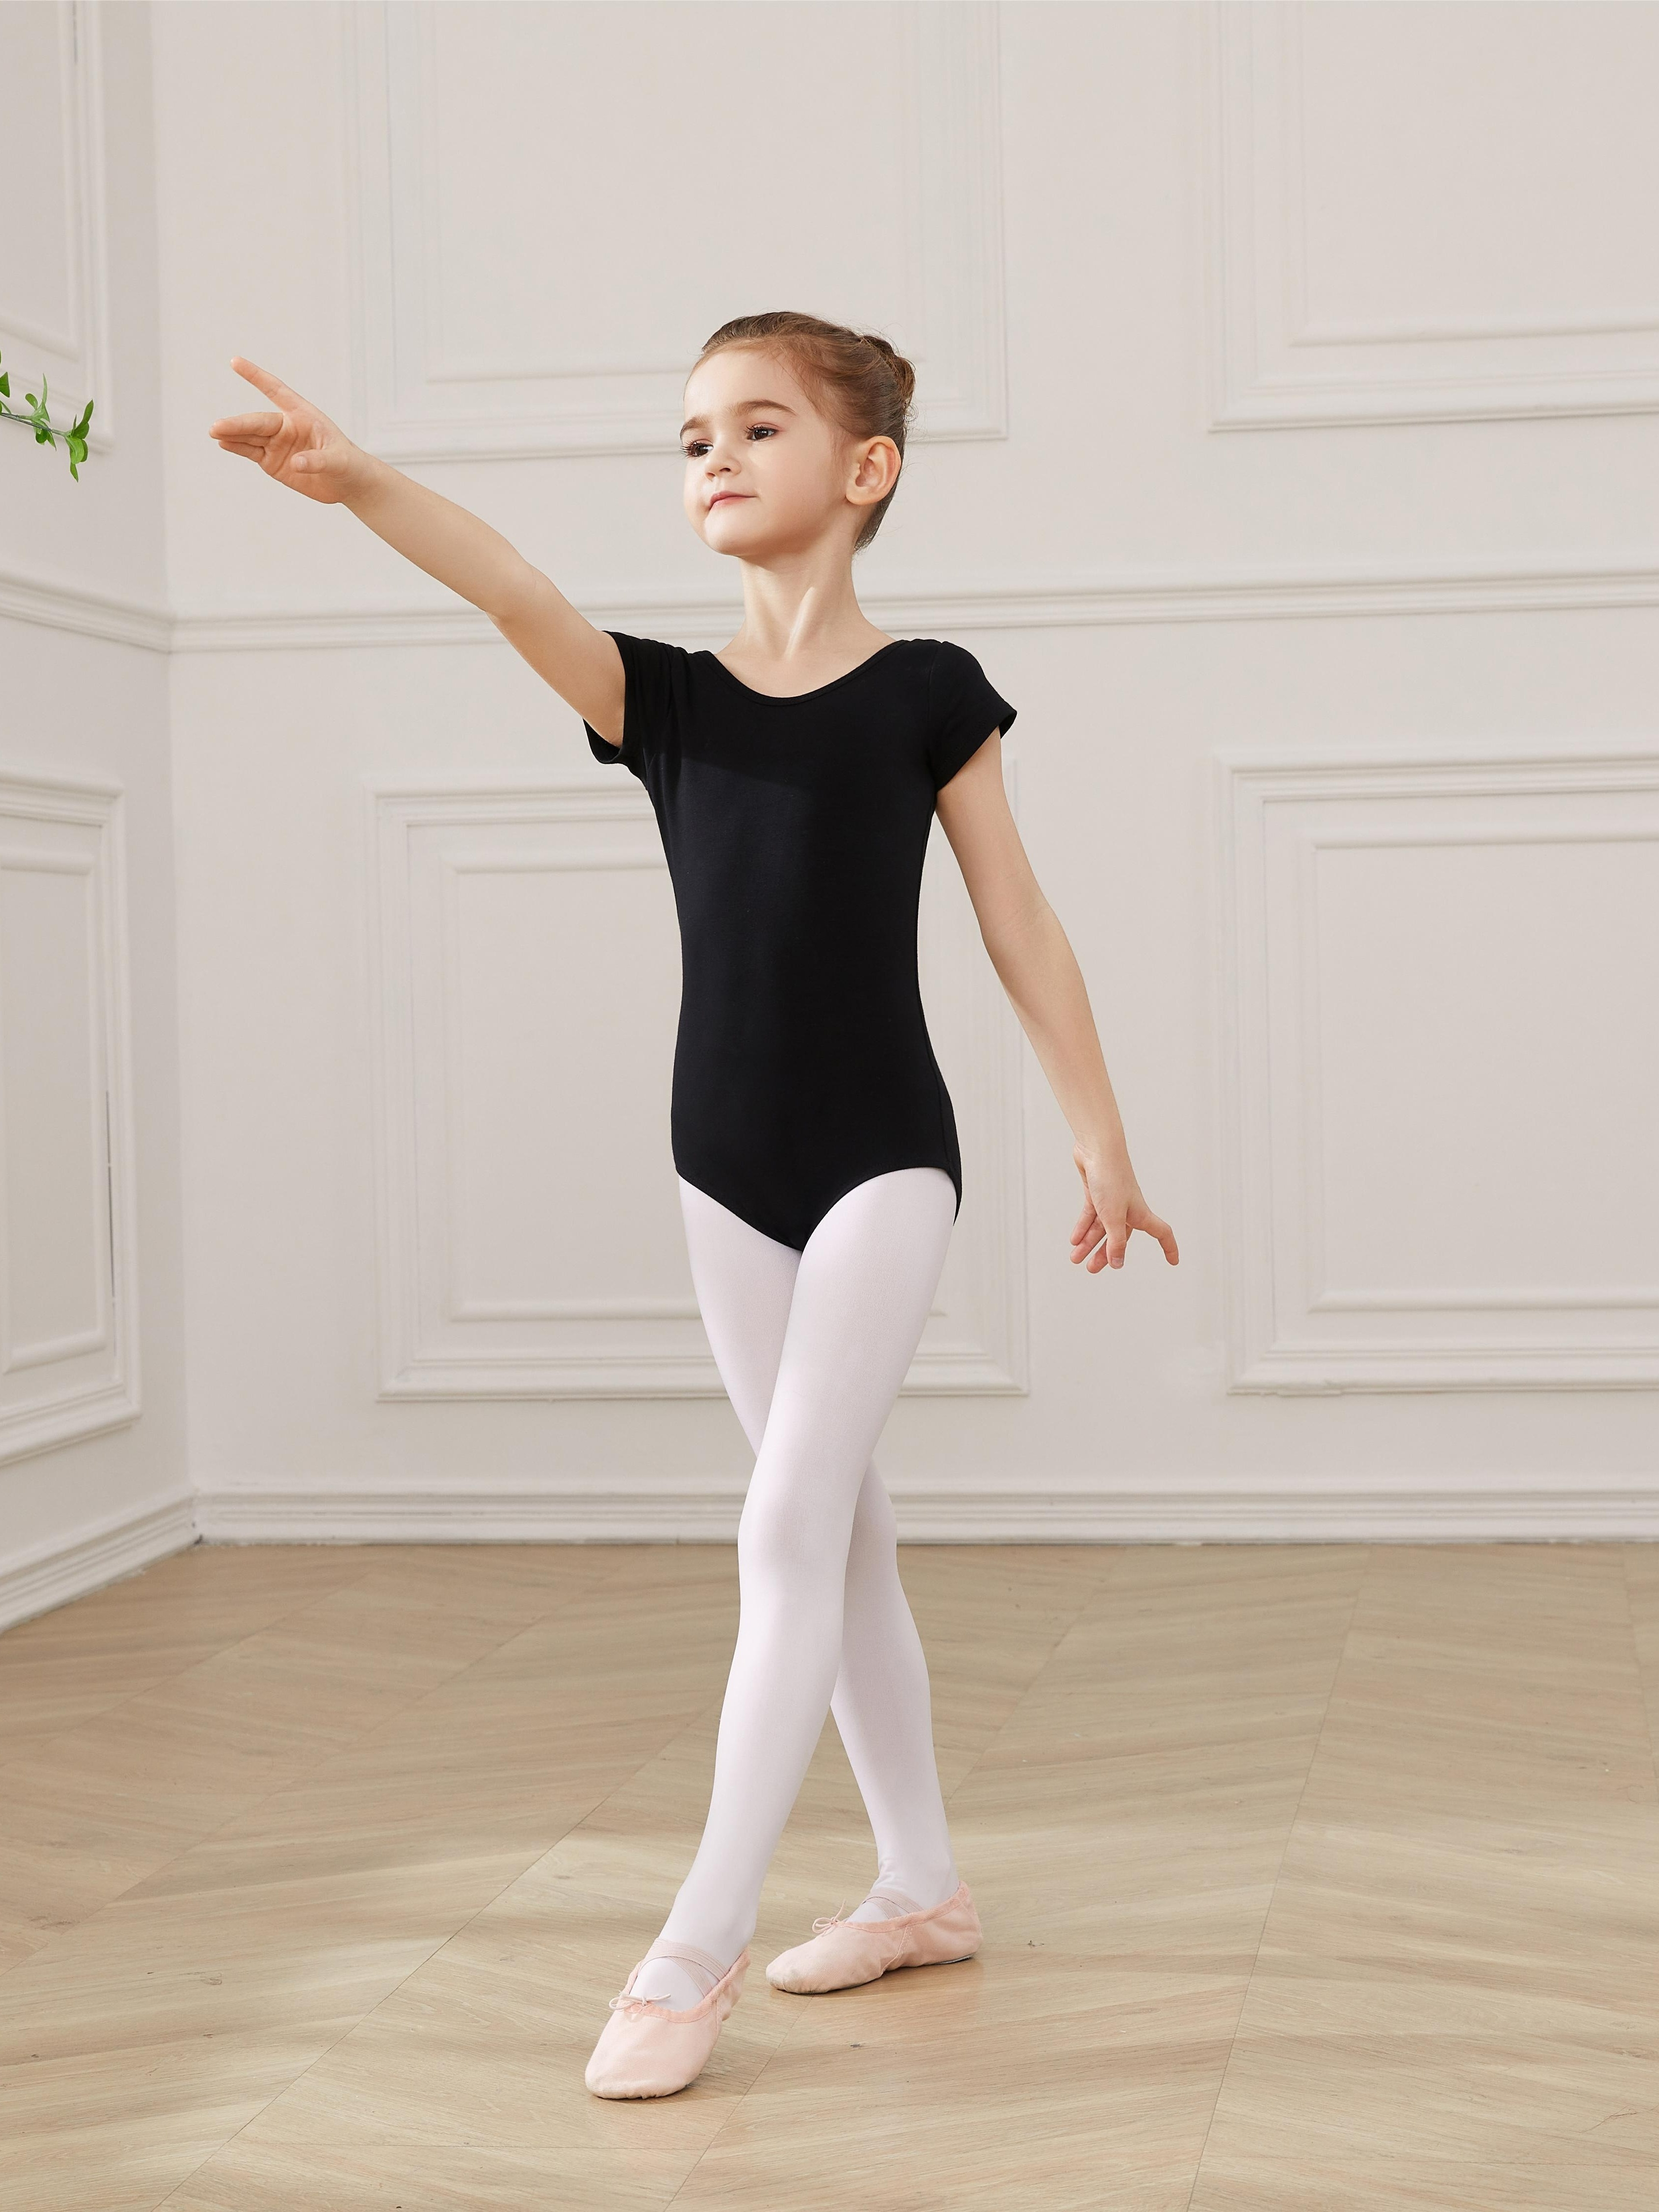 Kids Girls Gymnastics Short Sleeve Ballet Dance Outfit Leotards